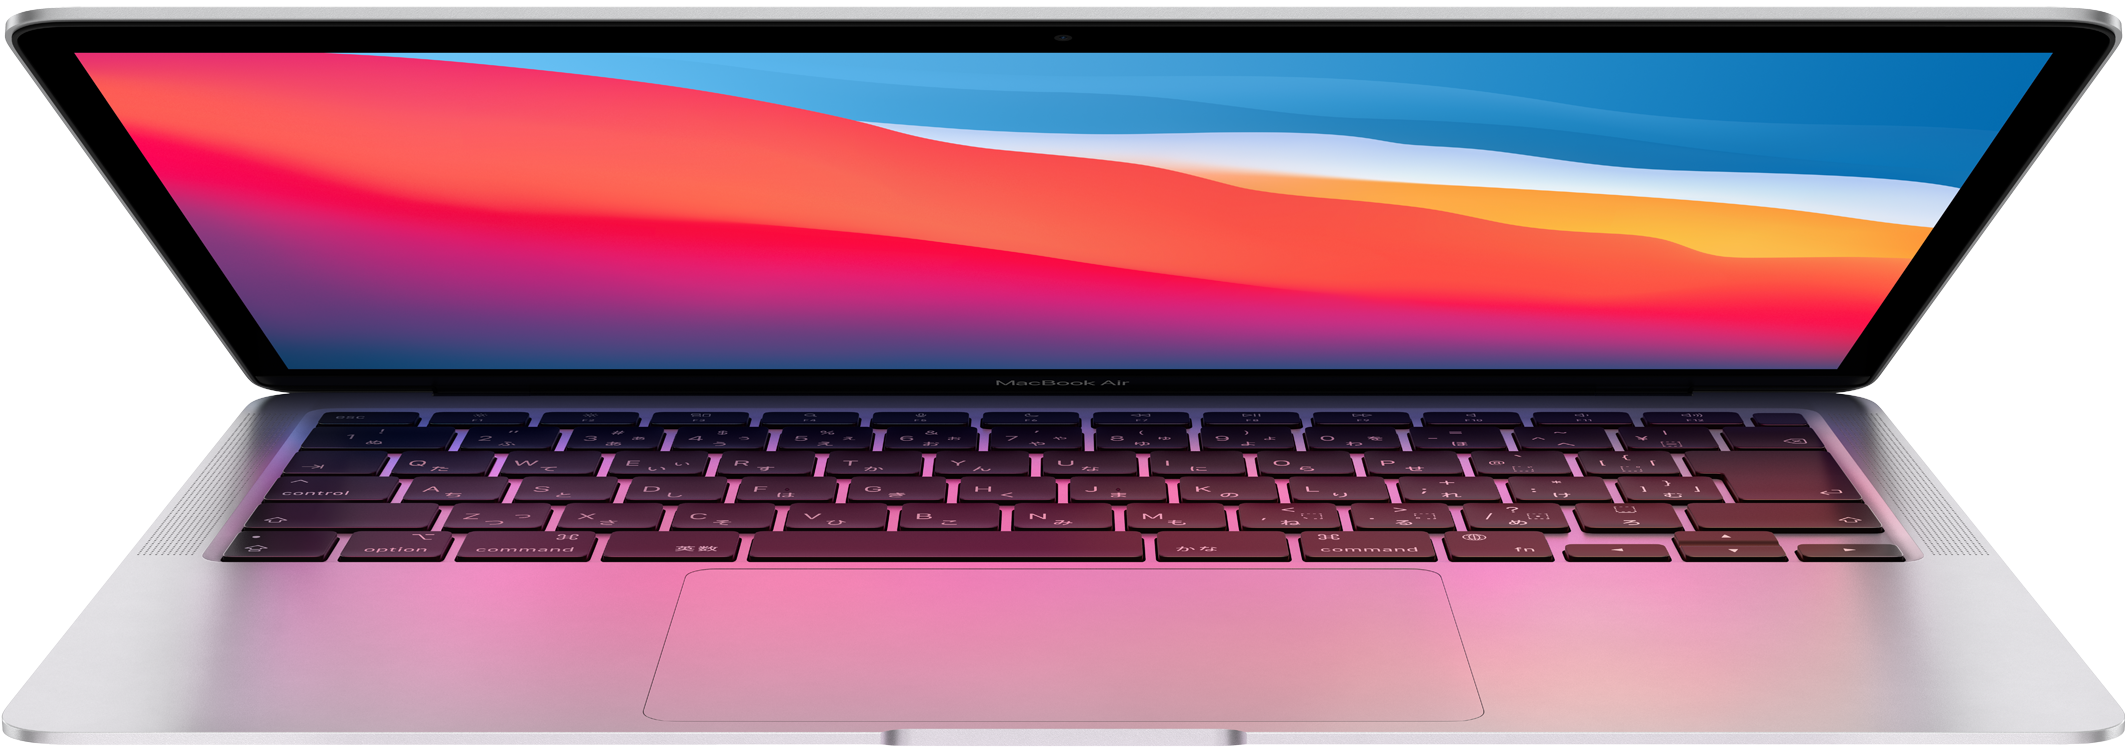 Macbook Air Air に新しい力をのせて。Apple M1 チップを搭載したMacBook Air、登場。すごい力を、軽々と。